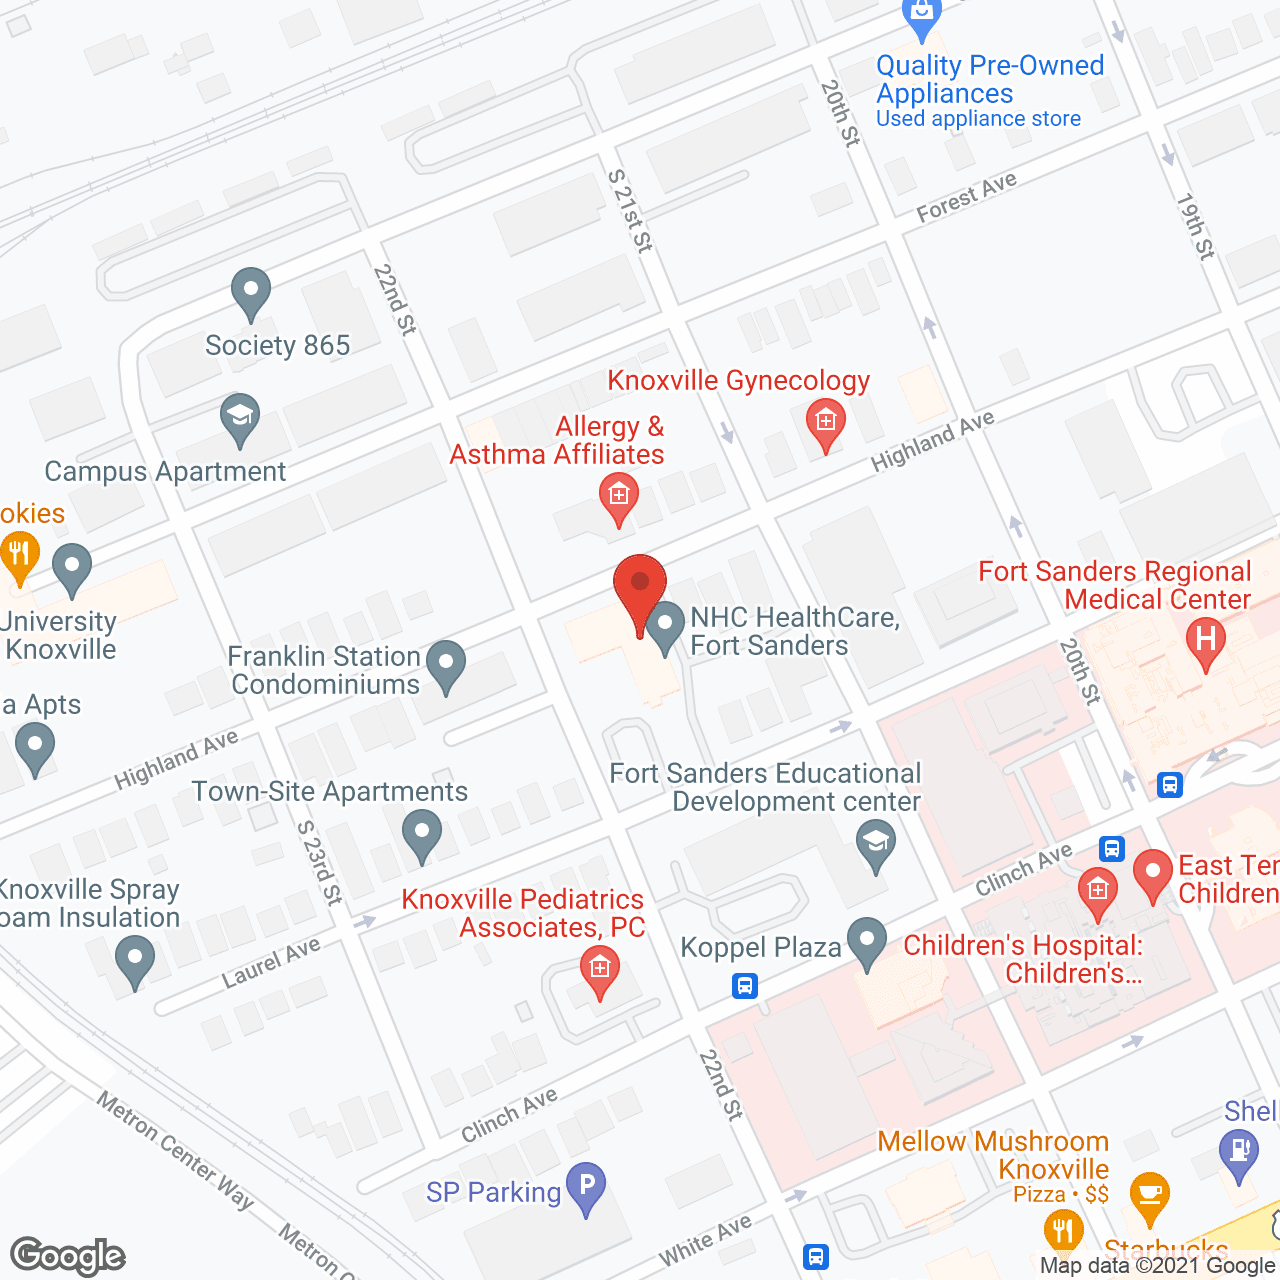 NHC Health Care Fort Sanders in google map